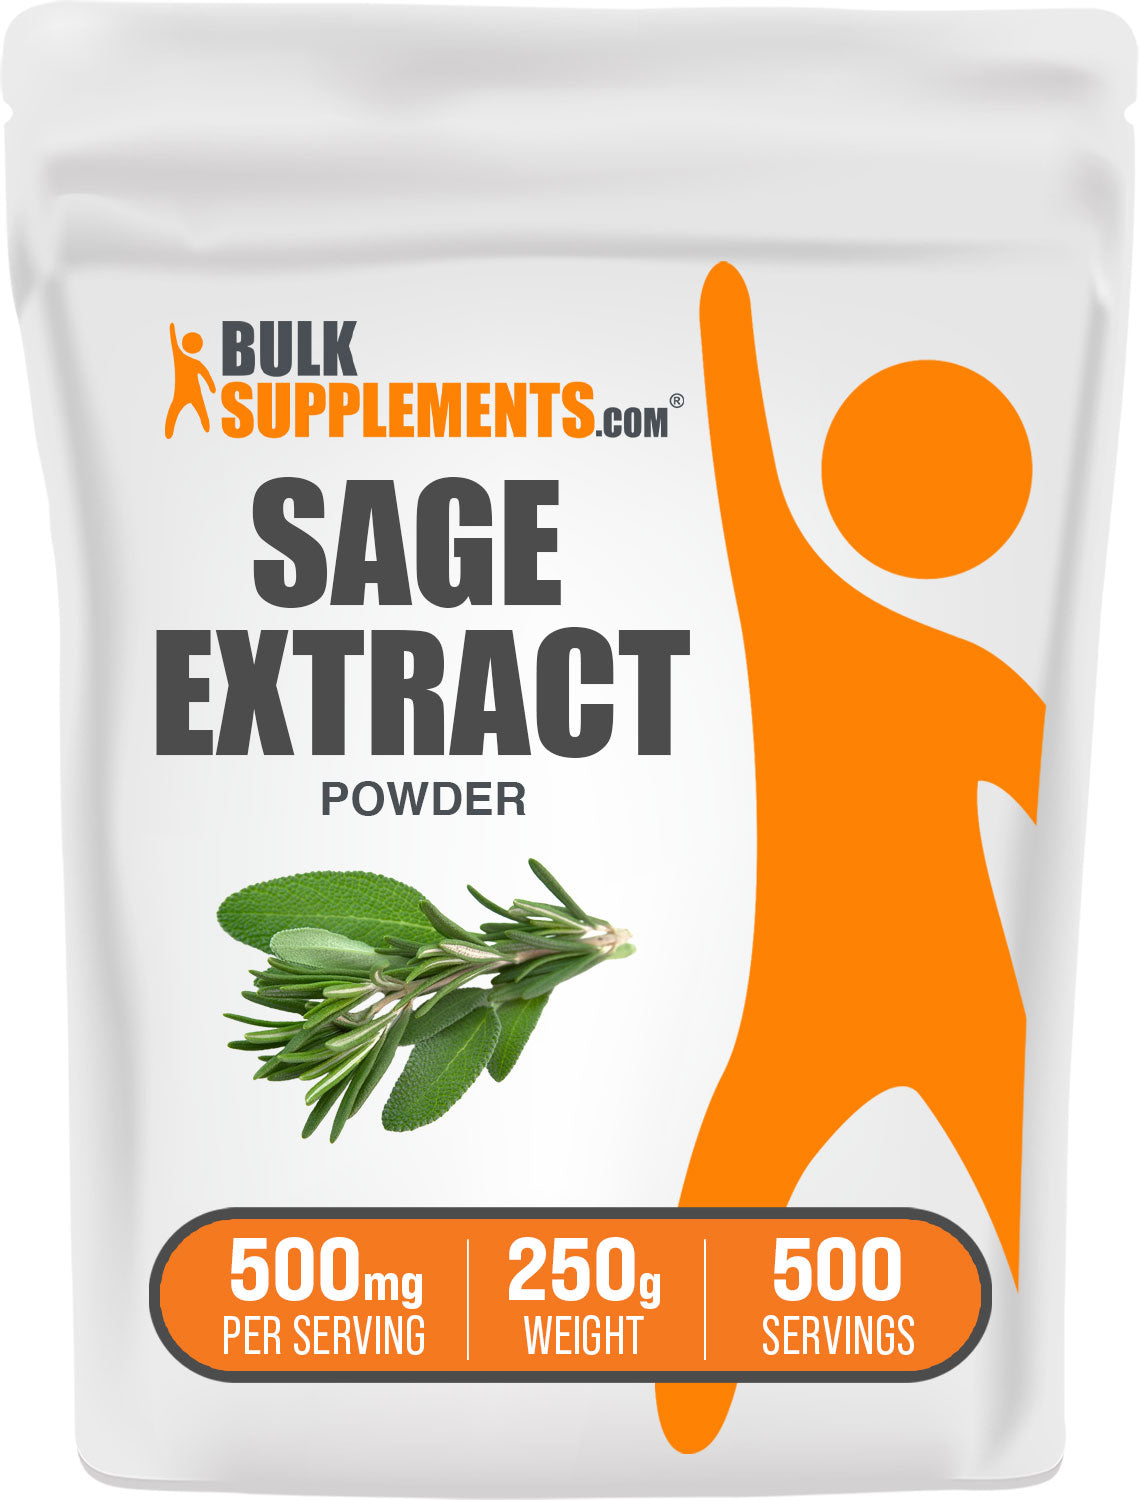 BulkSupplements.com Sage Extract Powder 250g bag